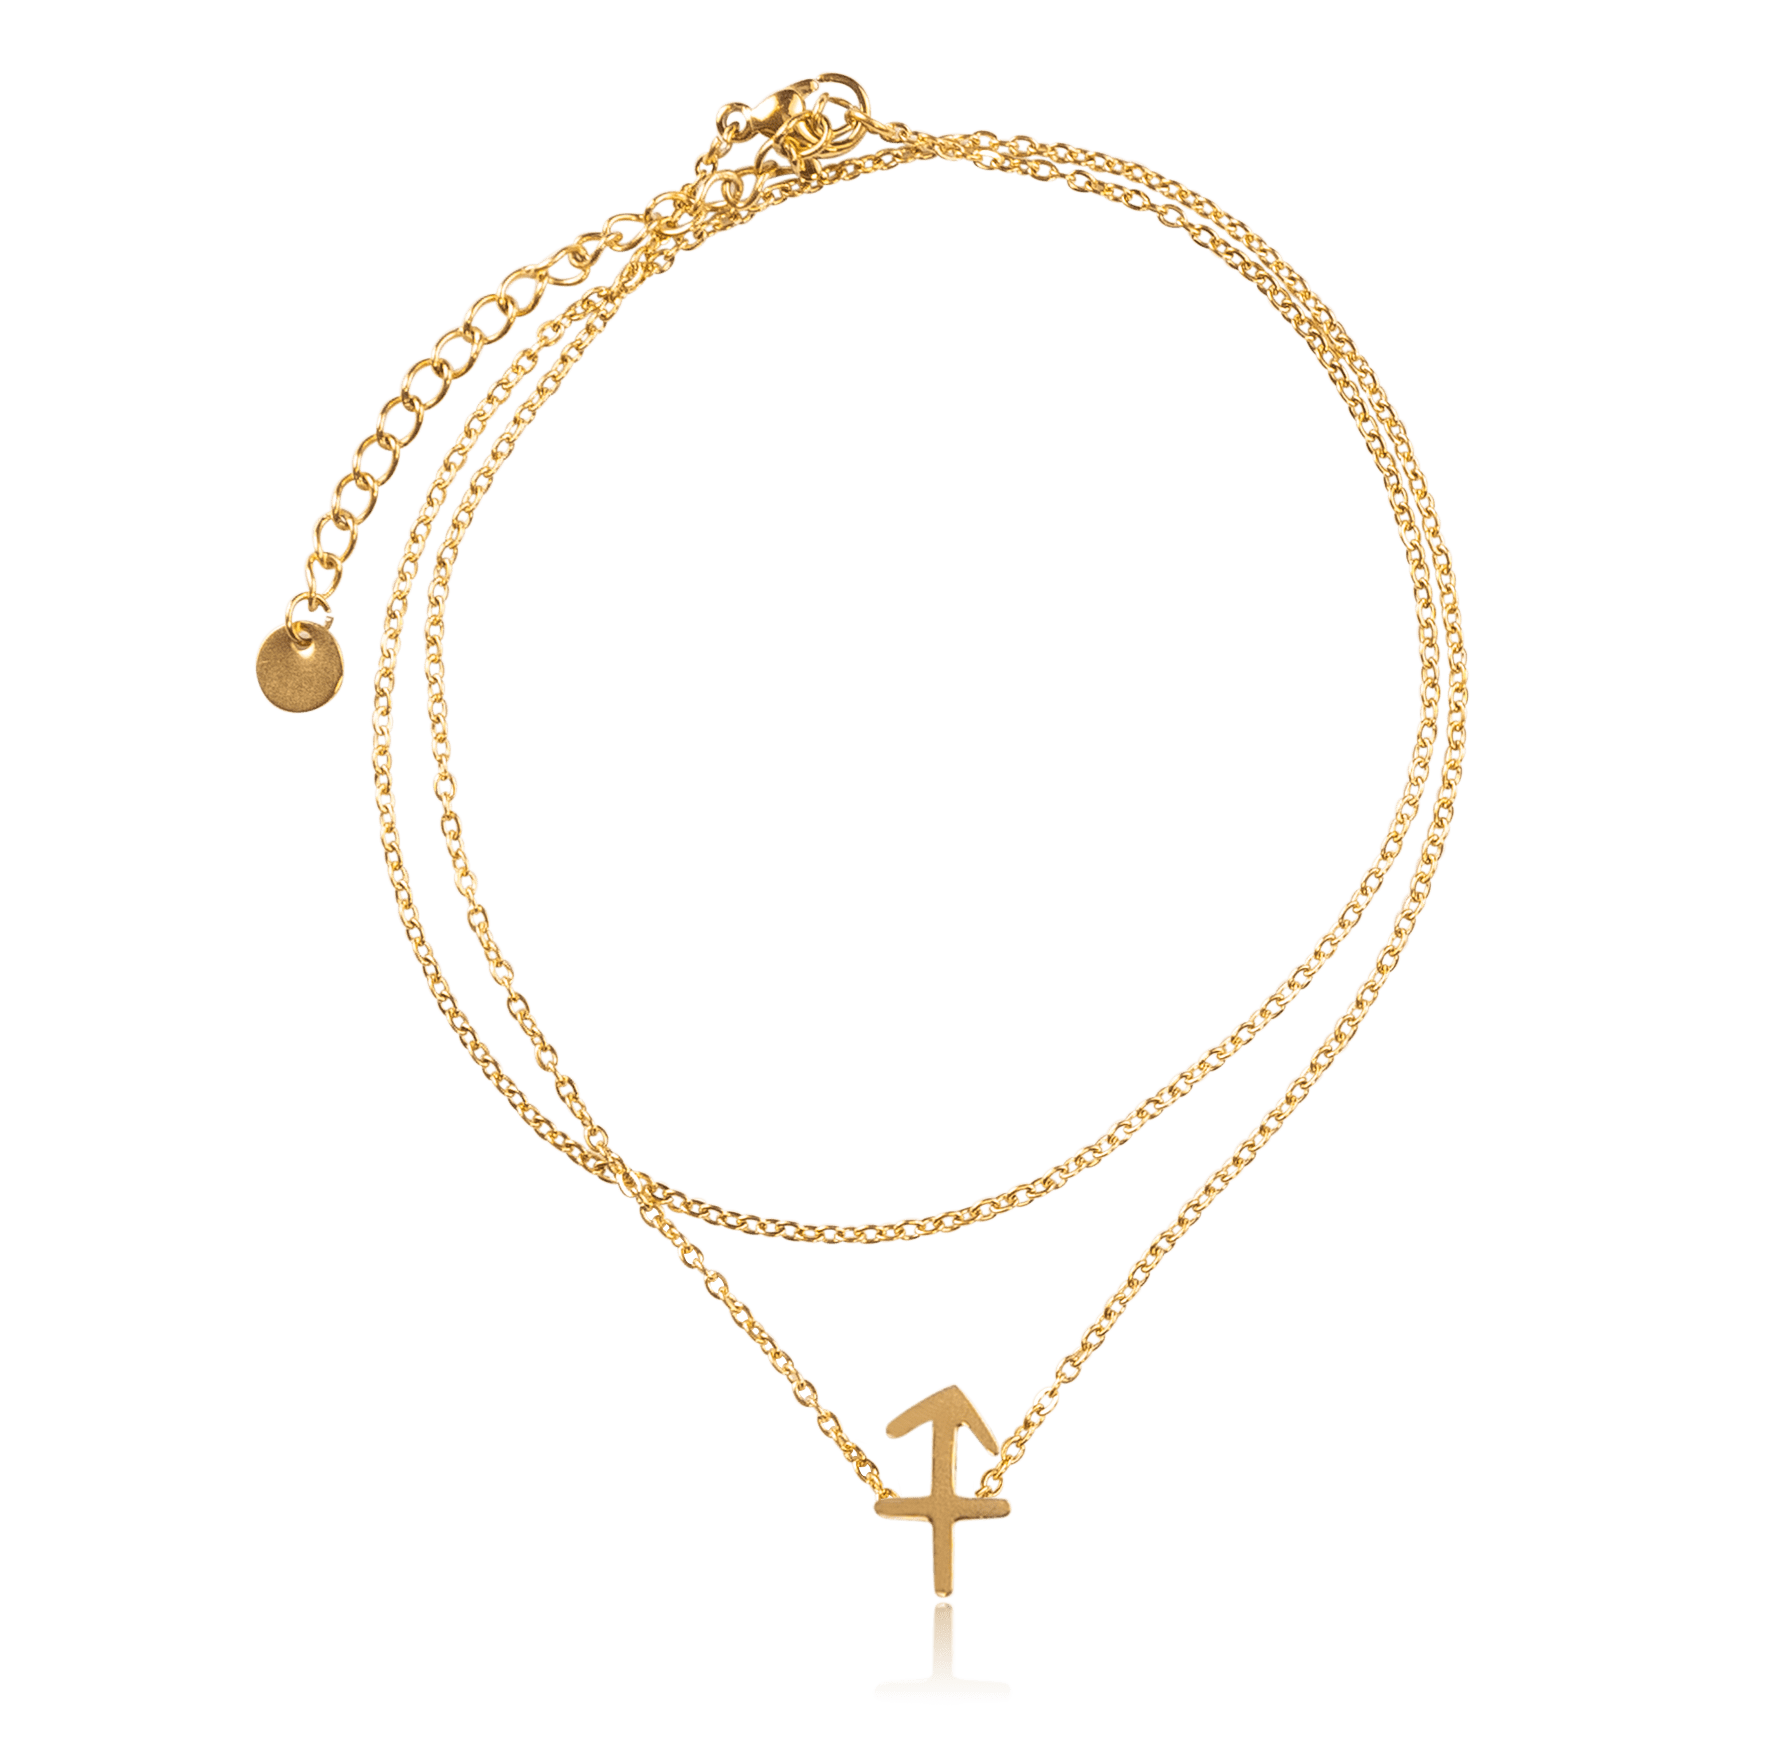 bianco rosso Bracelet Sagittarius - Bracelet cyprus greece jewelry gift free shipping europe worldwide